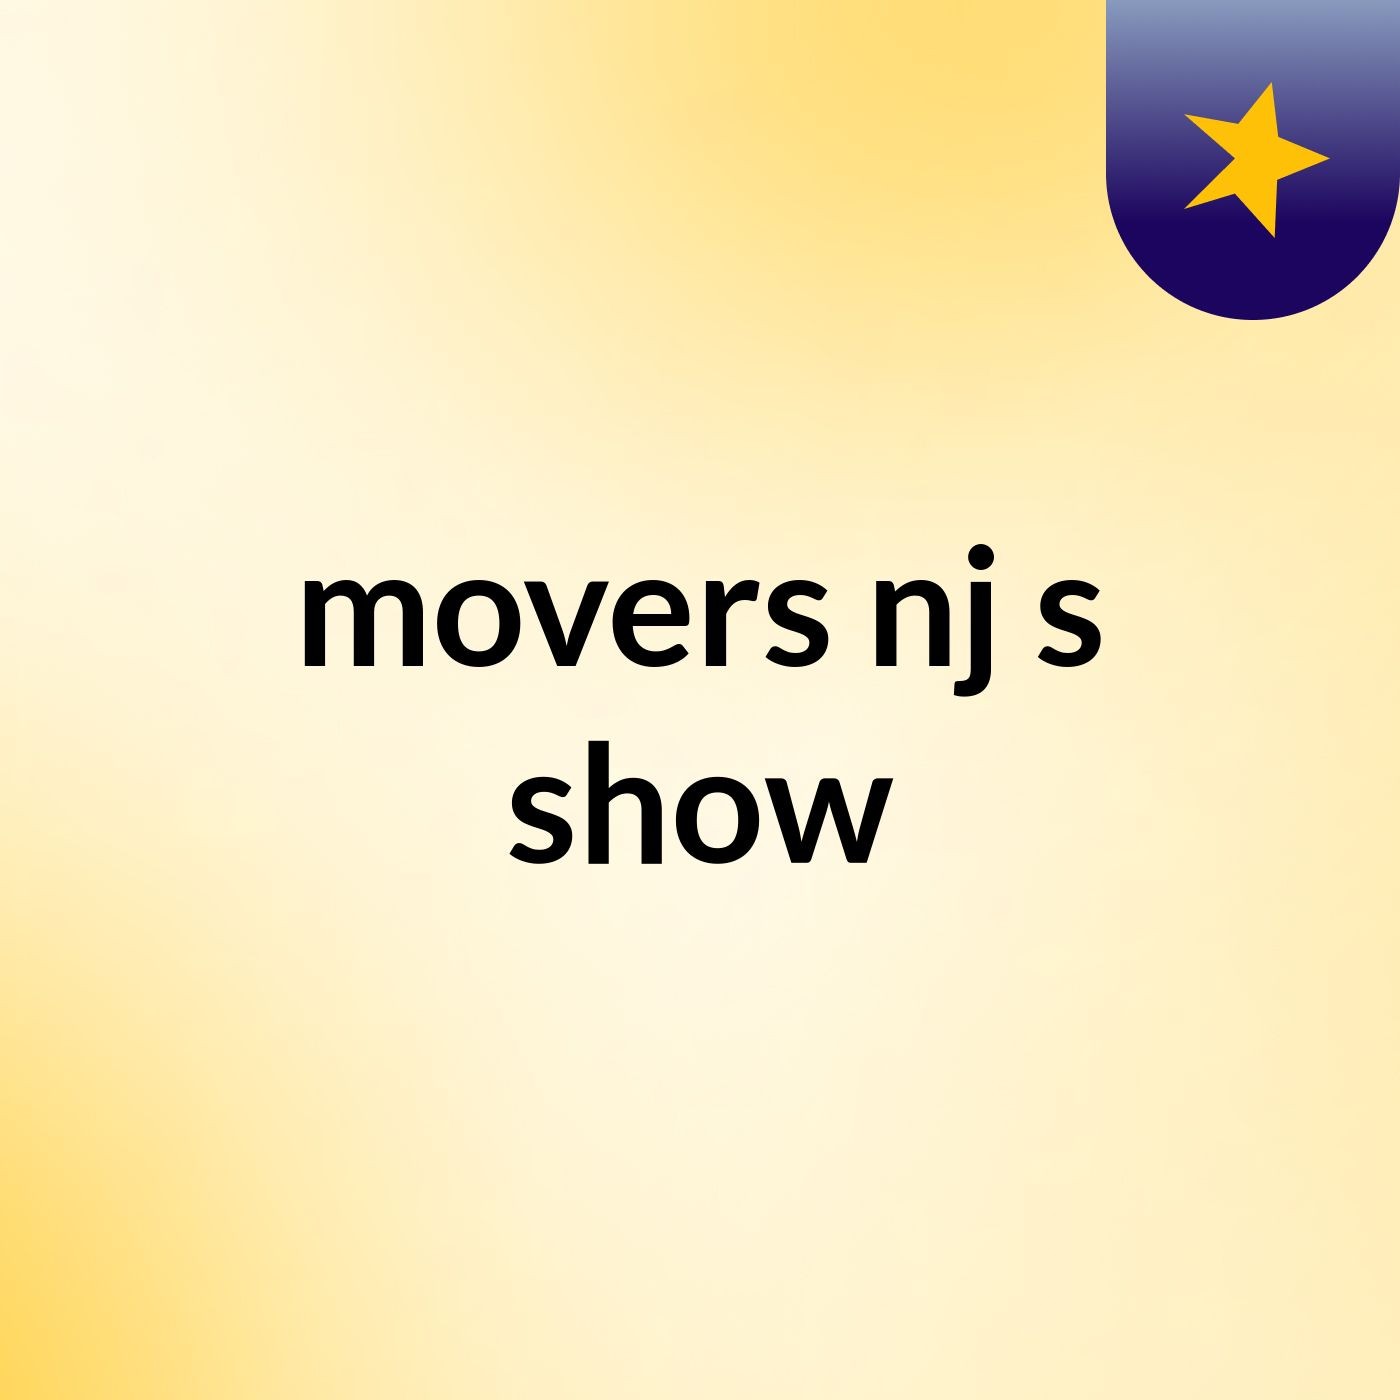 movers nj's show